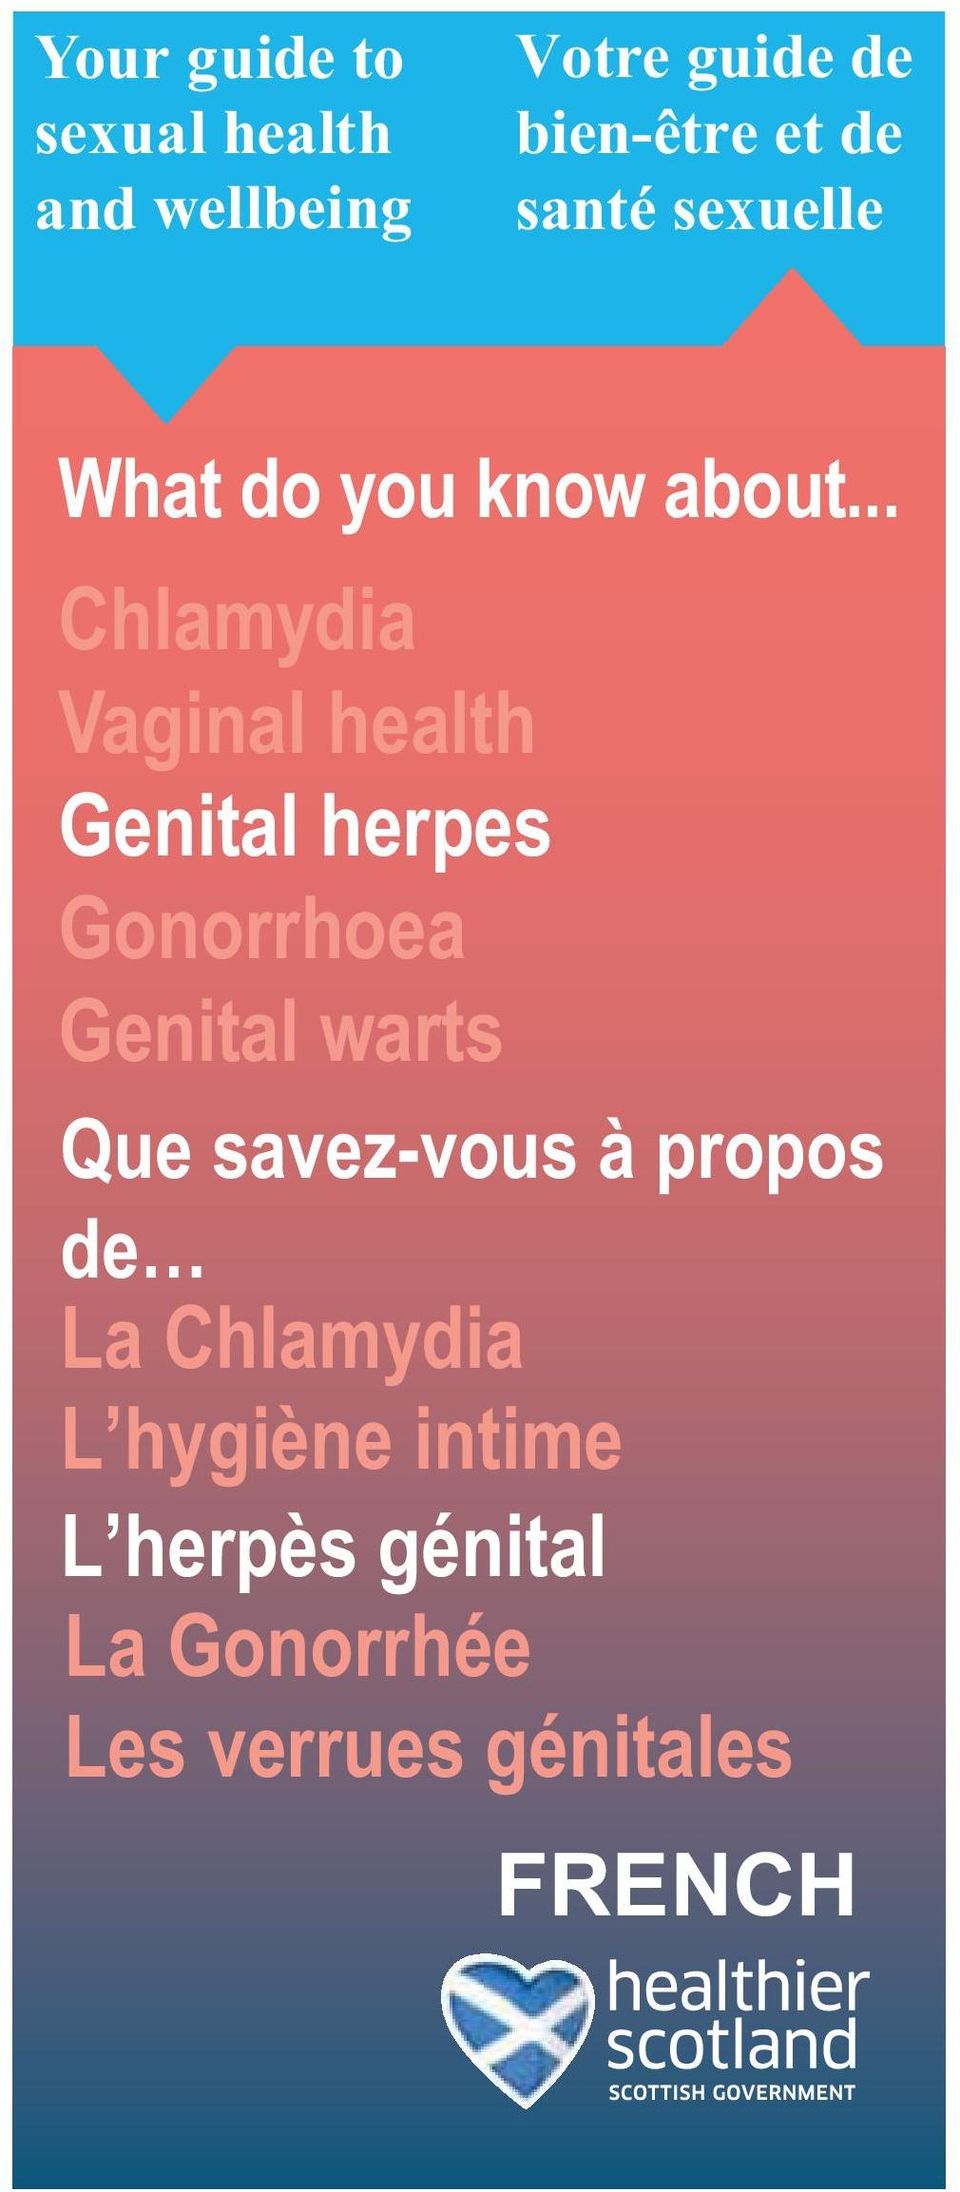 .. Chlamydia Vaginal health Genital herpes Gonorrhoea Genital warts Que